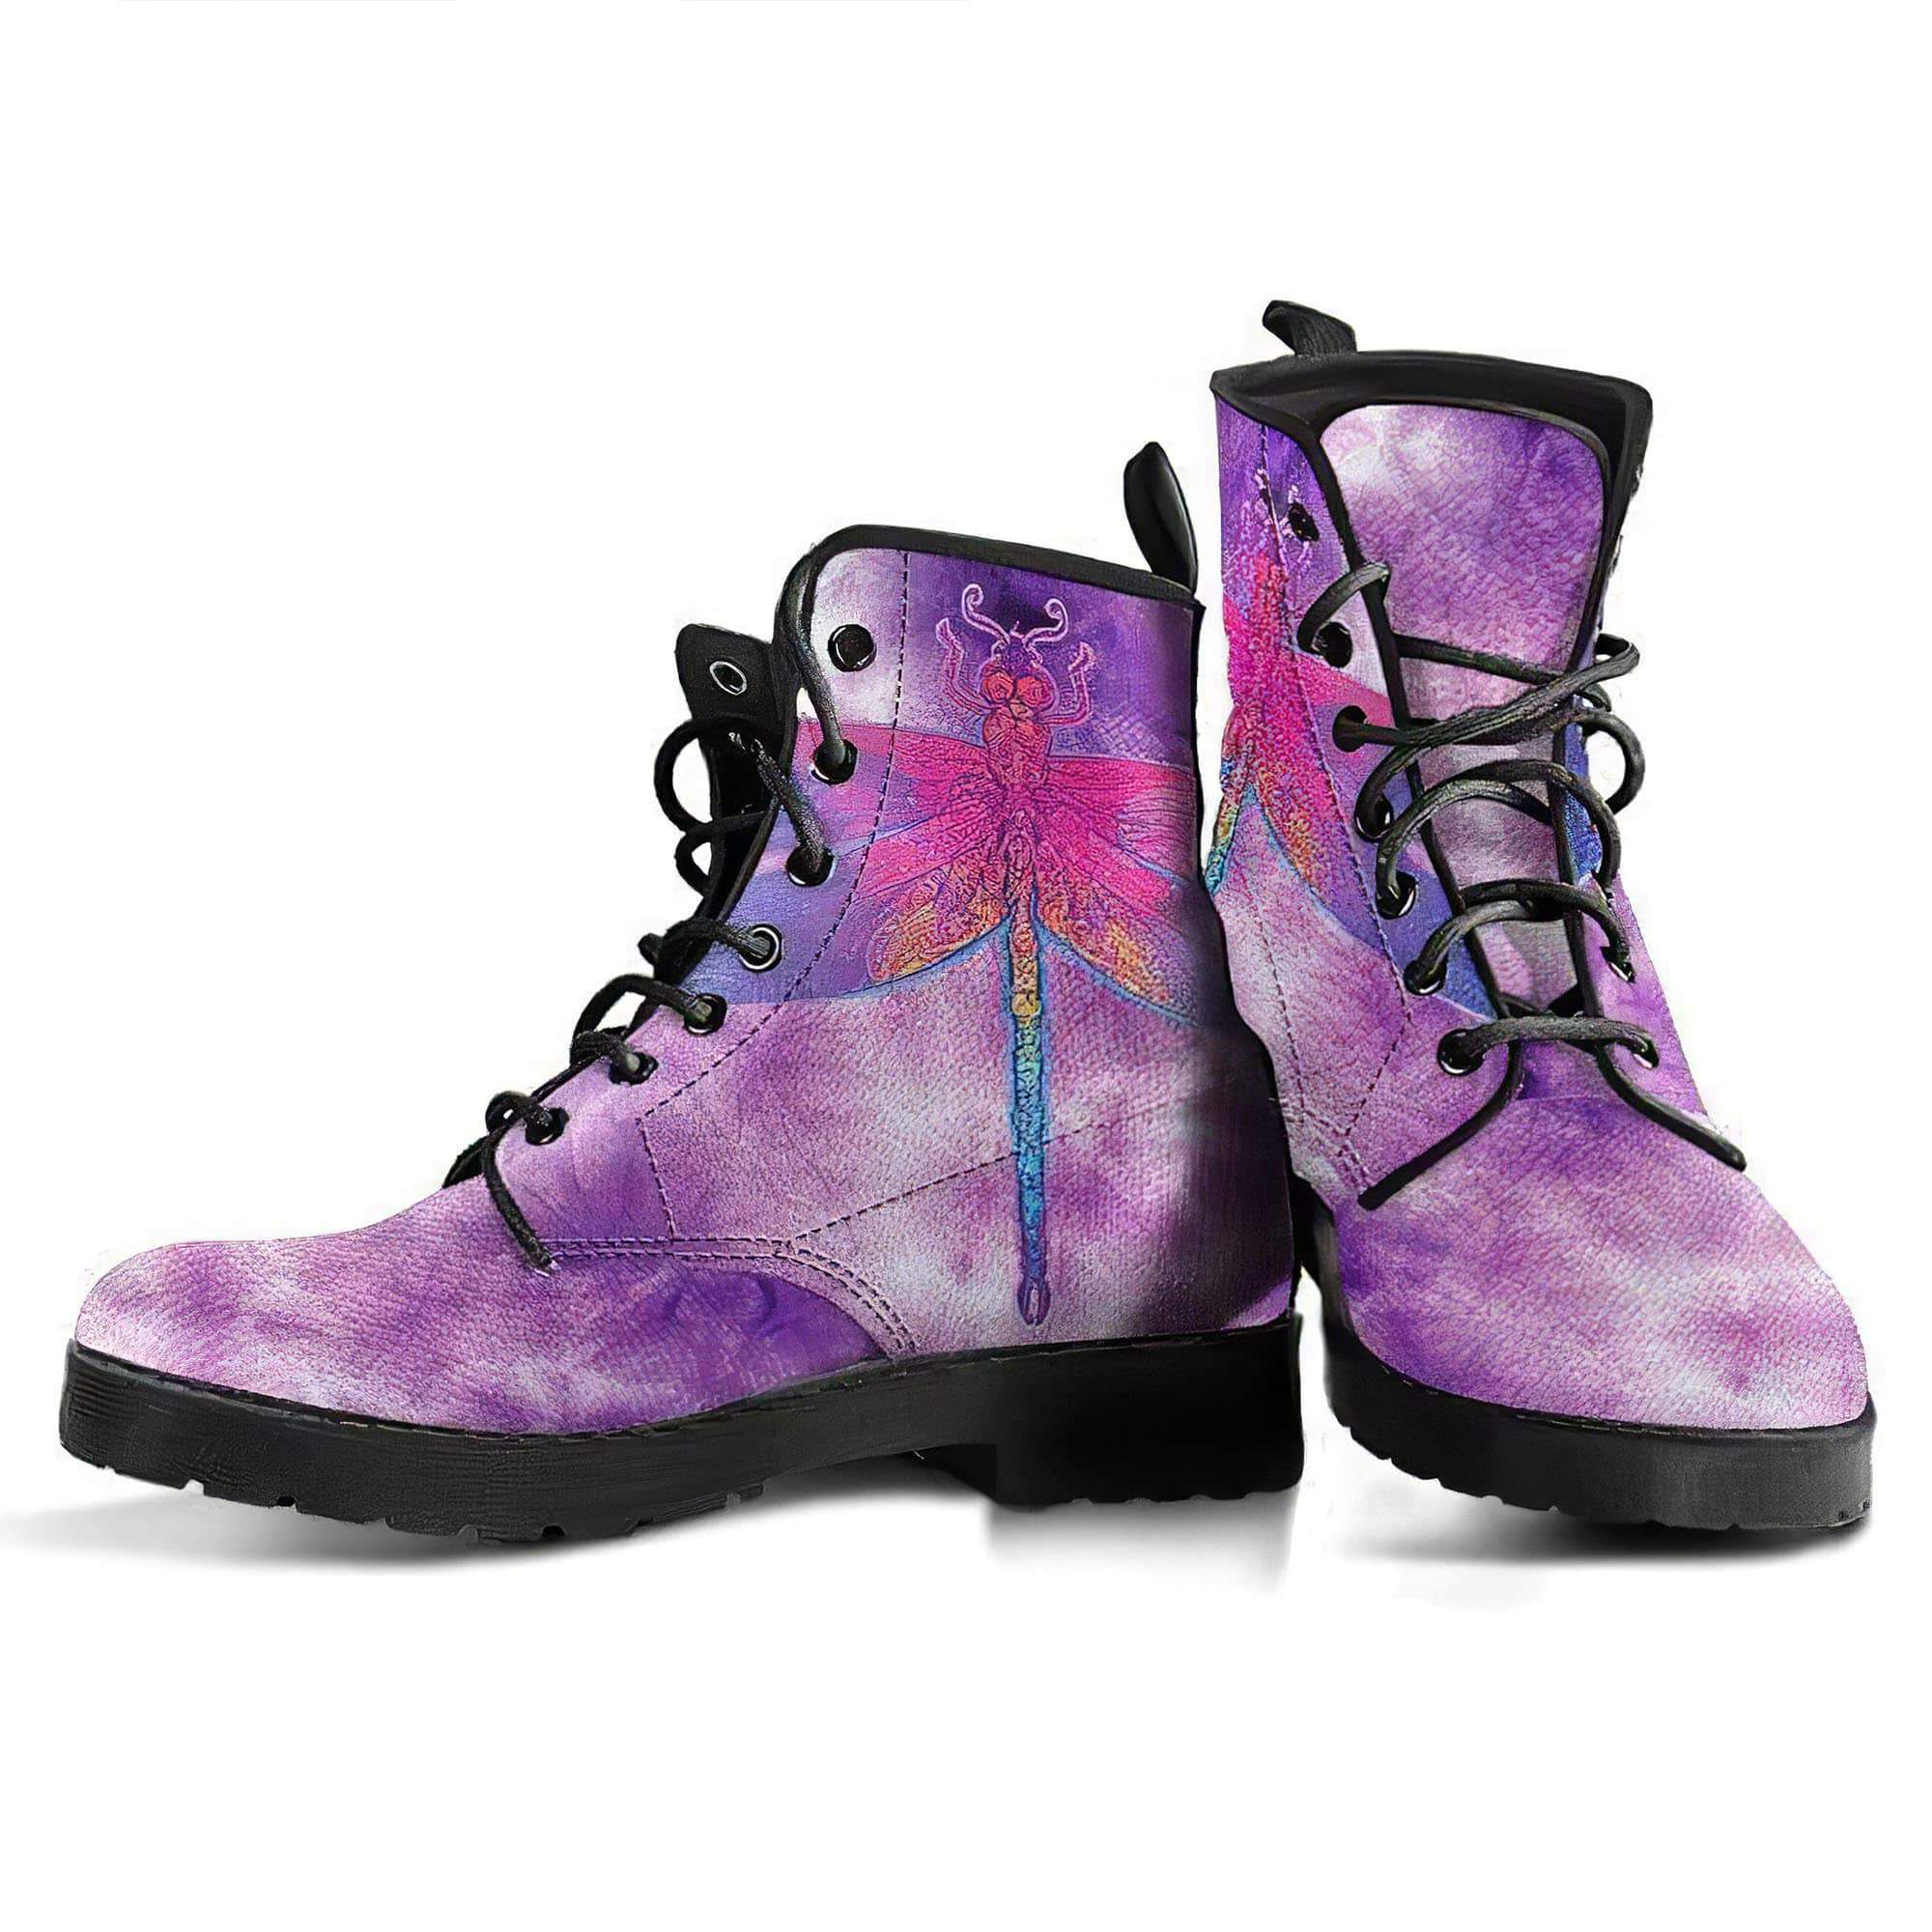 tiedye-dragonfly-3-women-s-boots-vegan-friendly-leather-women-s-leather-boots-12051964985405.jpg